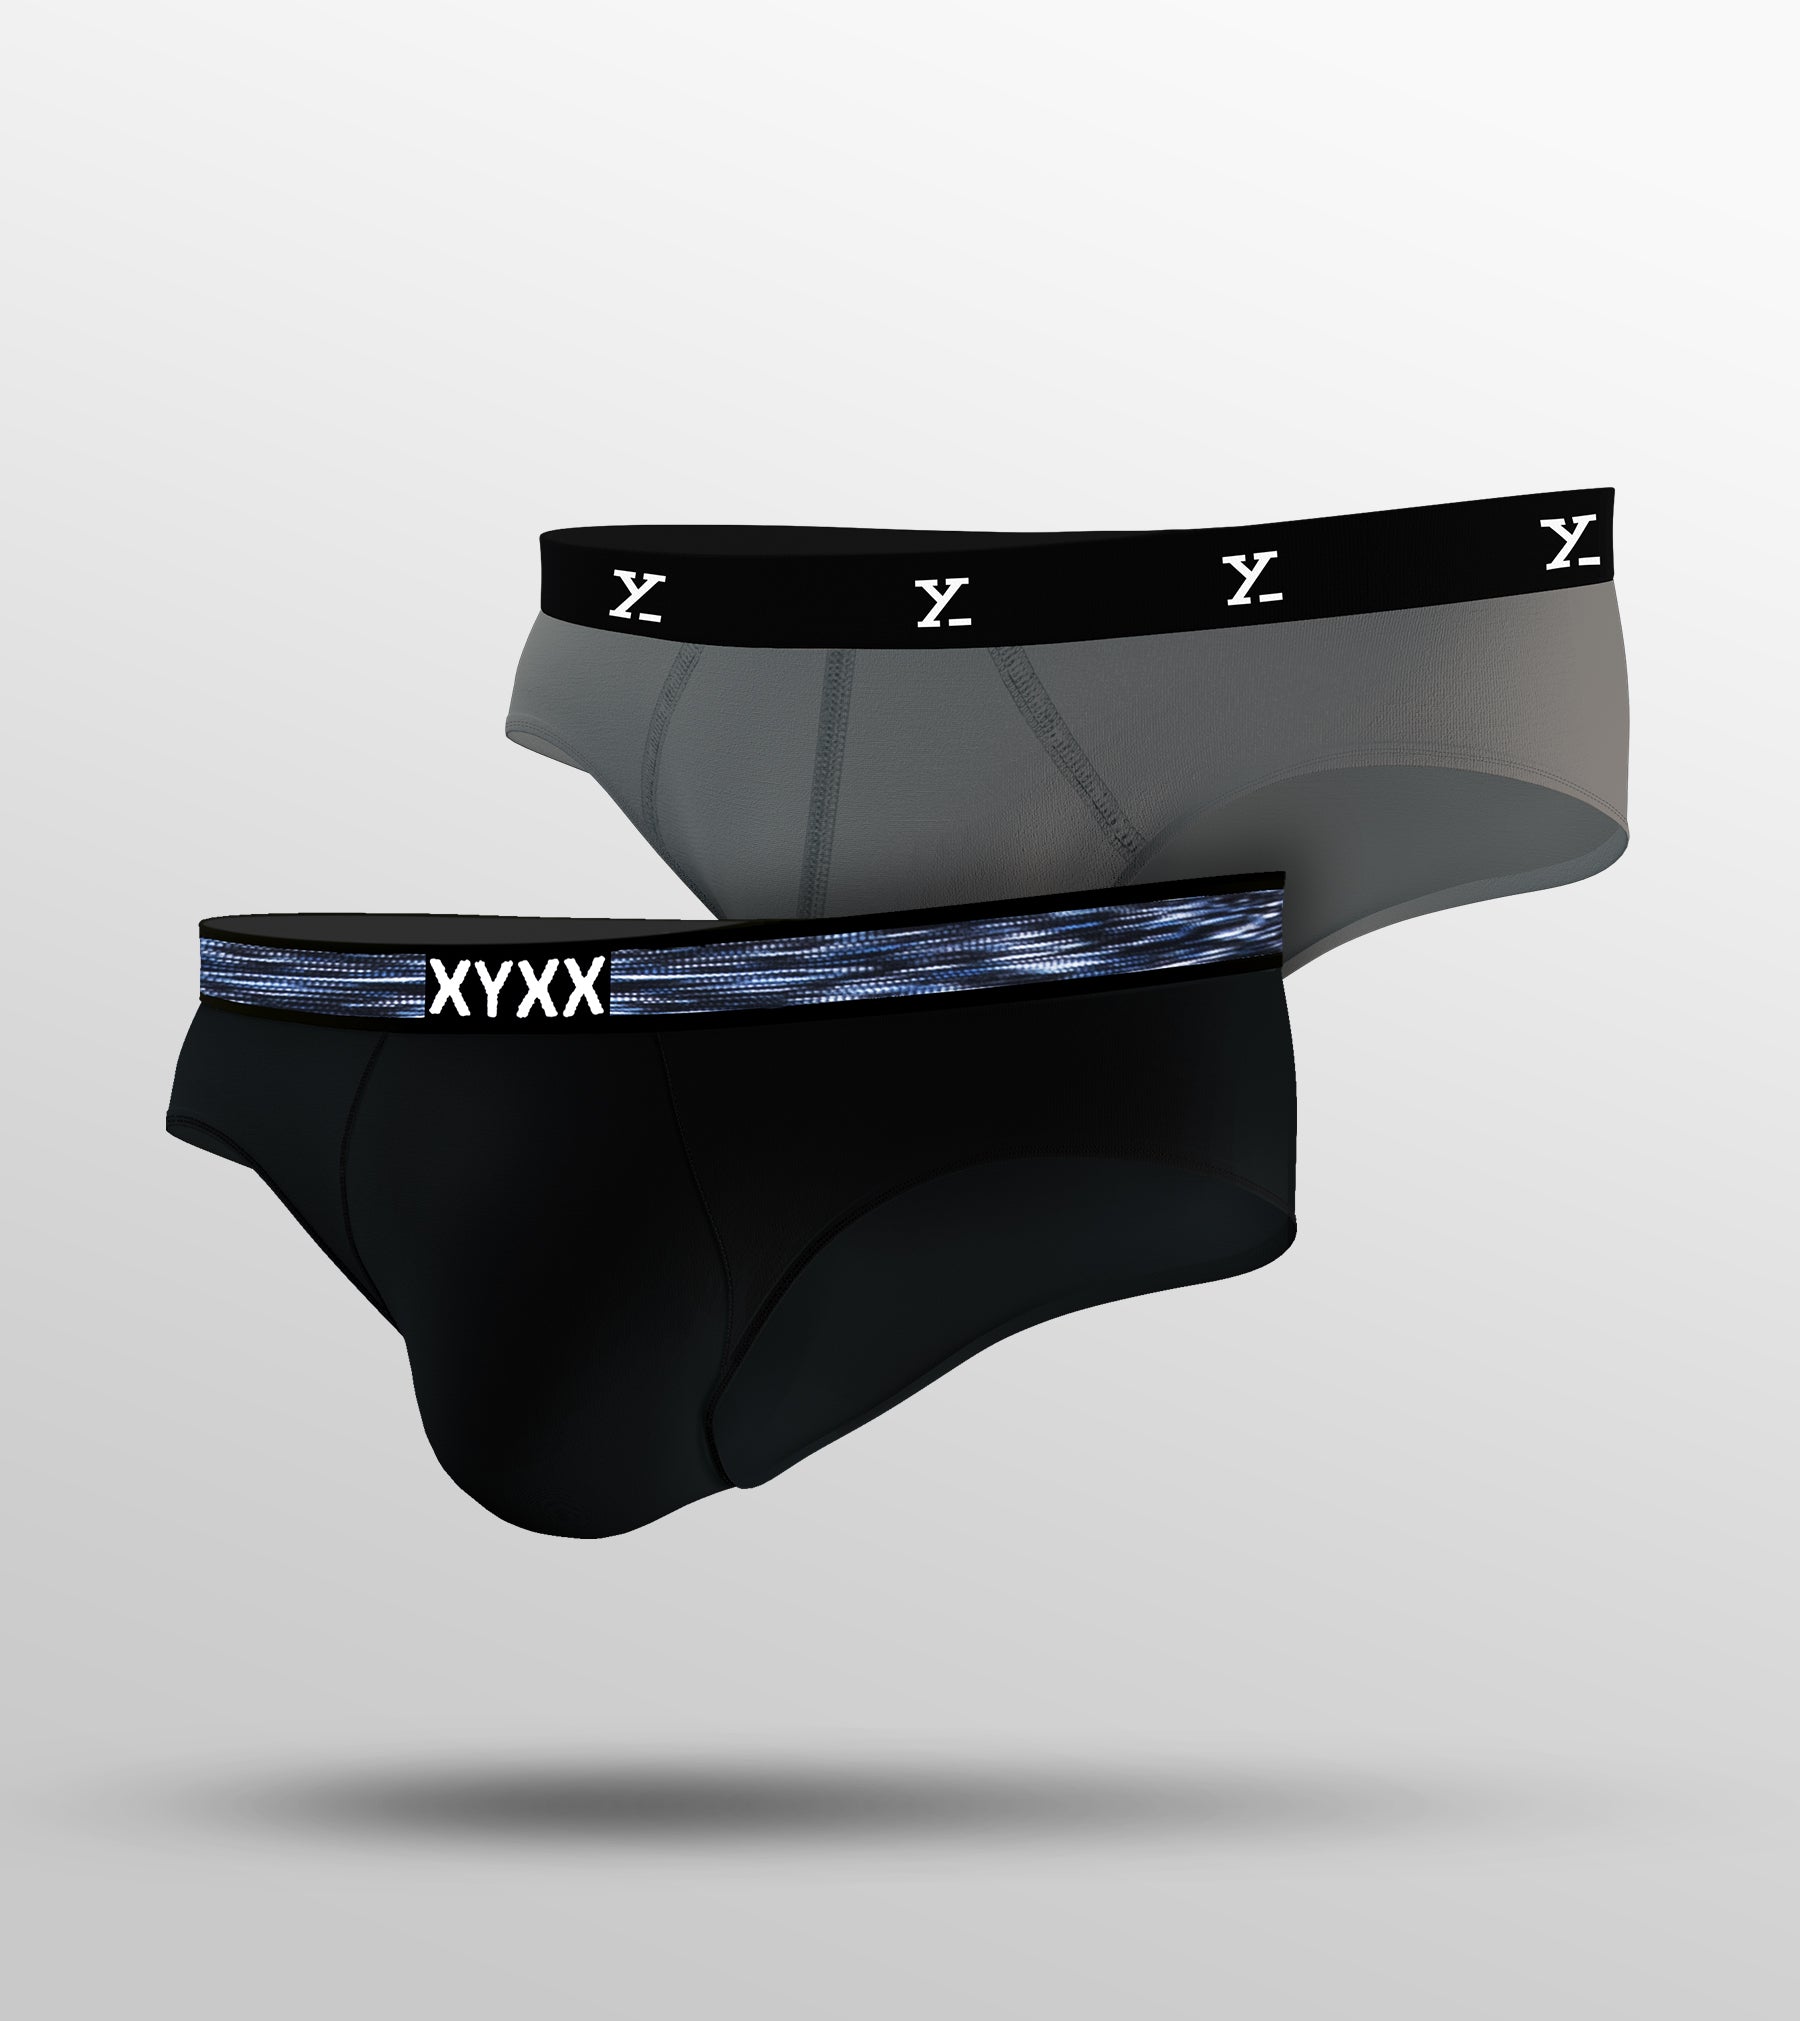 Tencel Modal Briefs For Men Pack of 2 (Grey, Black) -  XYXX Mens Apparels